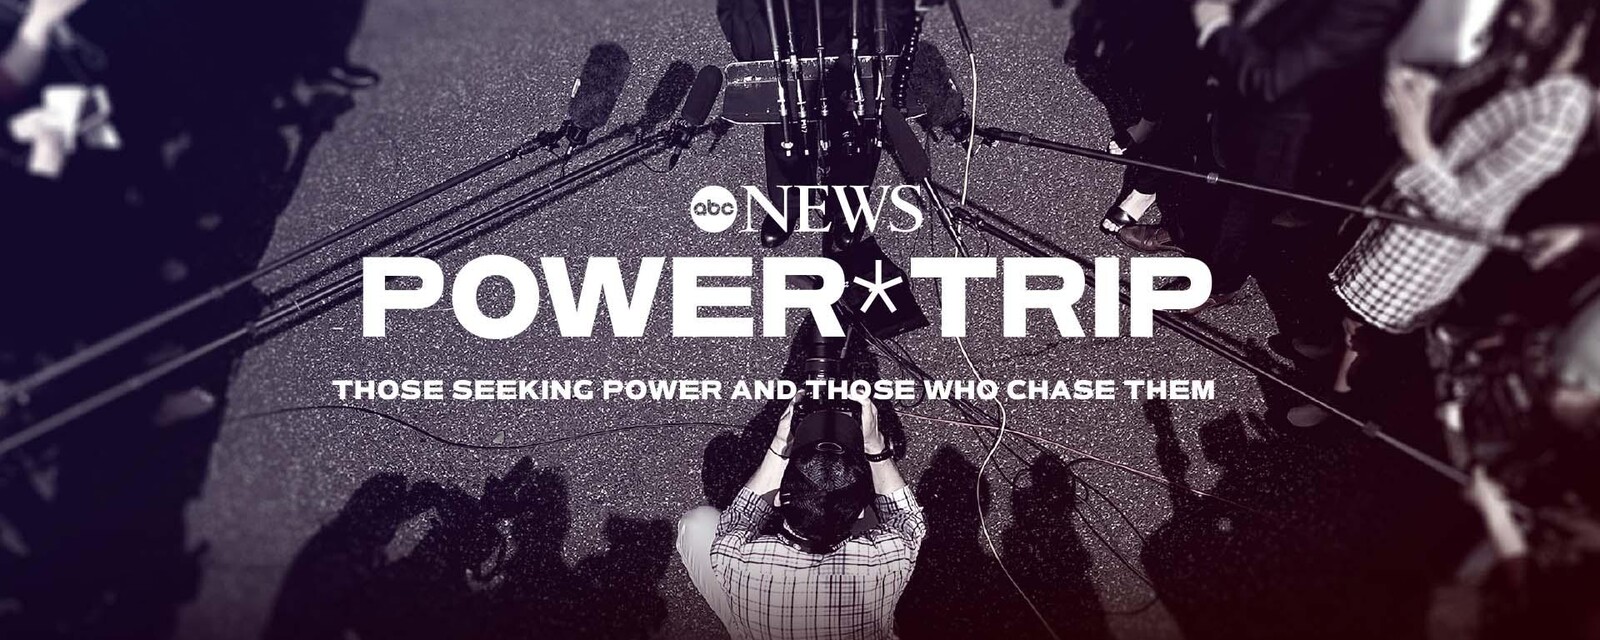 Watch the ABC News Studios docu-series Power Trip on Hulu